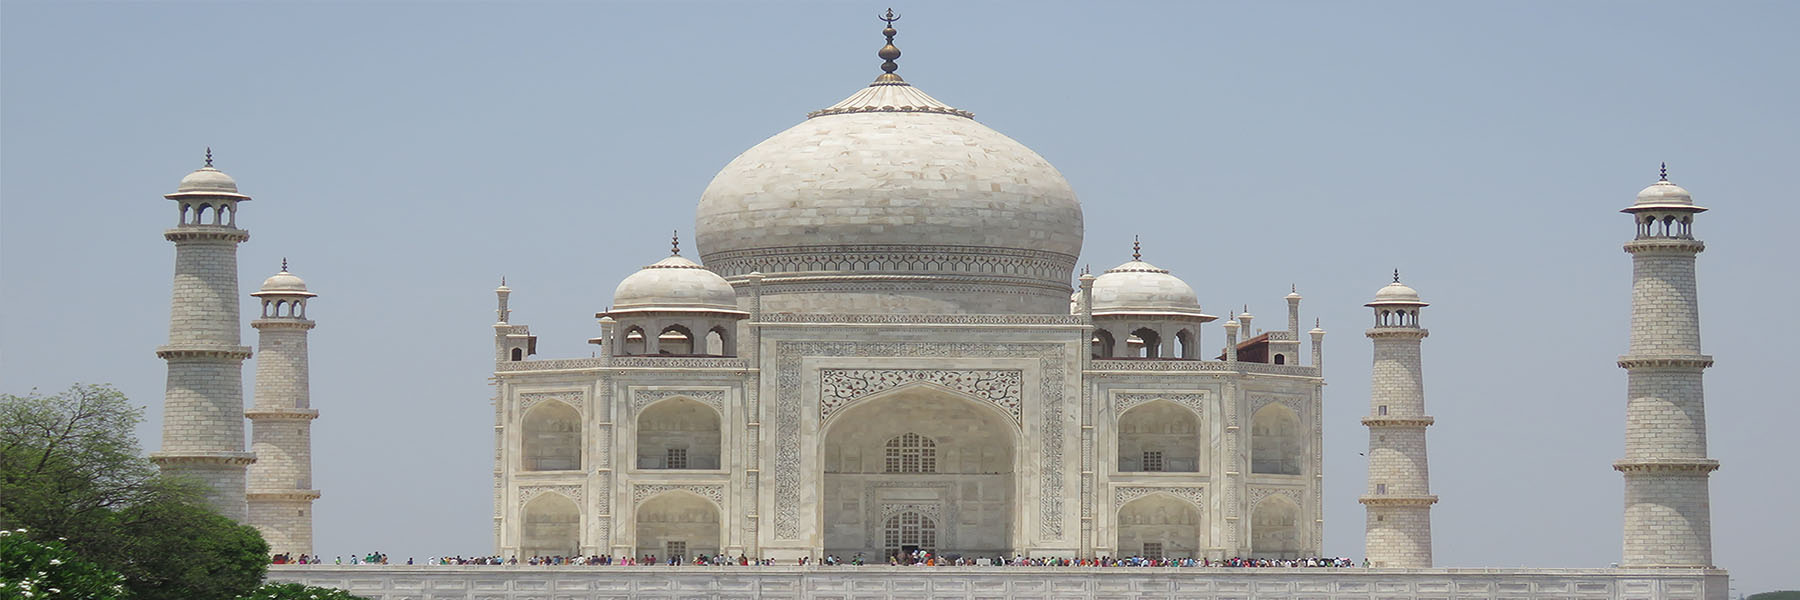 The Taj Mahal mausoleum